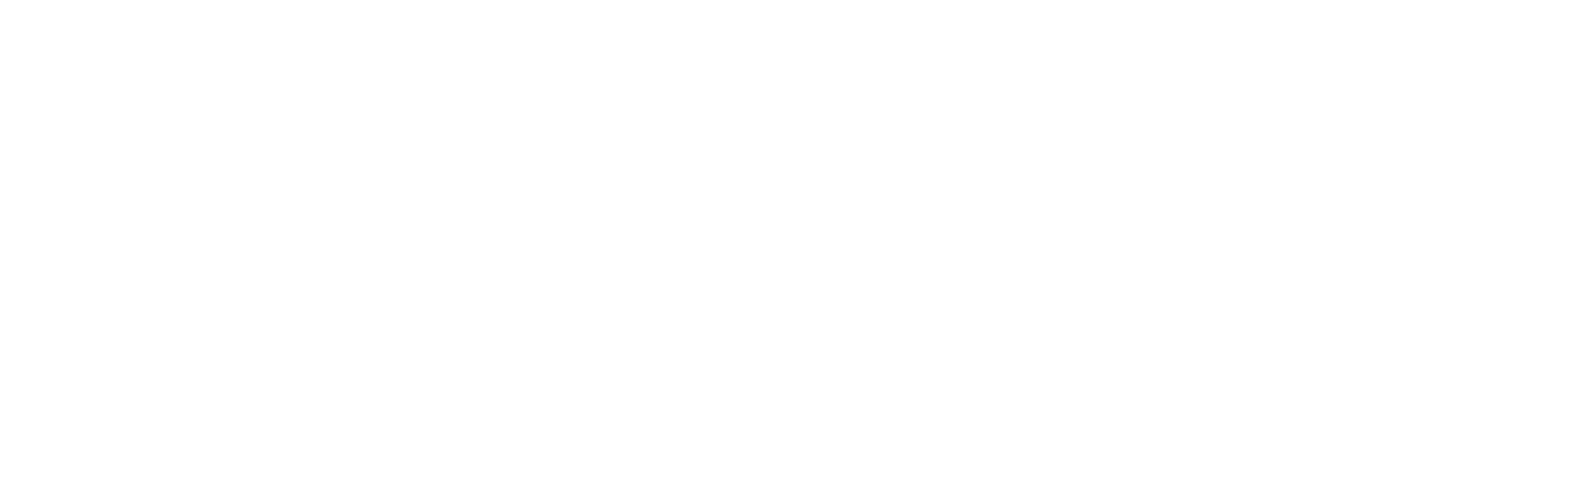 Vice_Logo.png